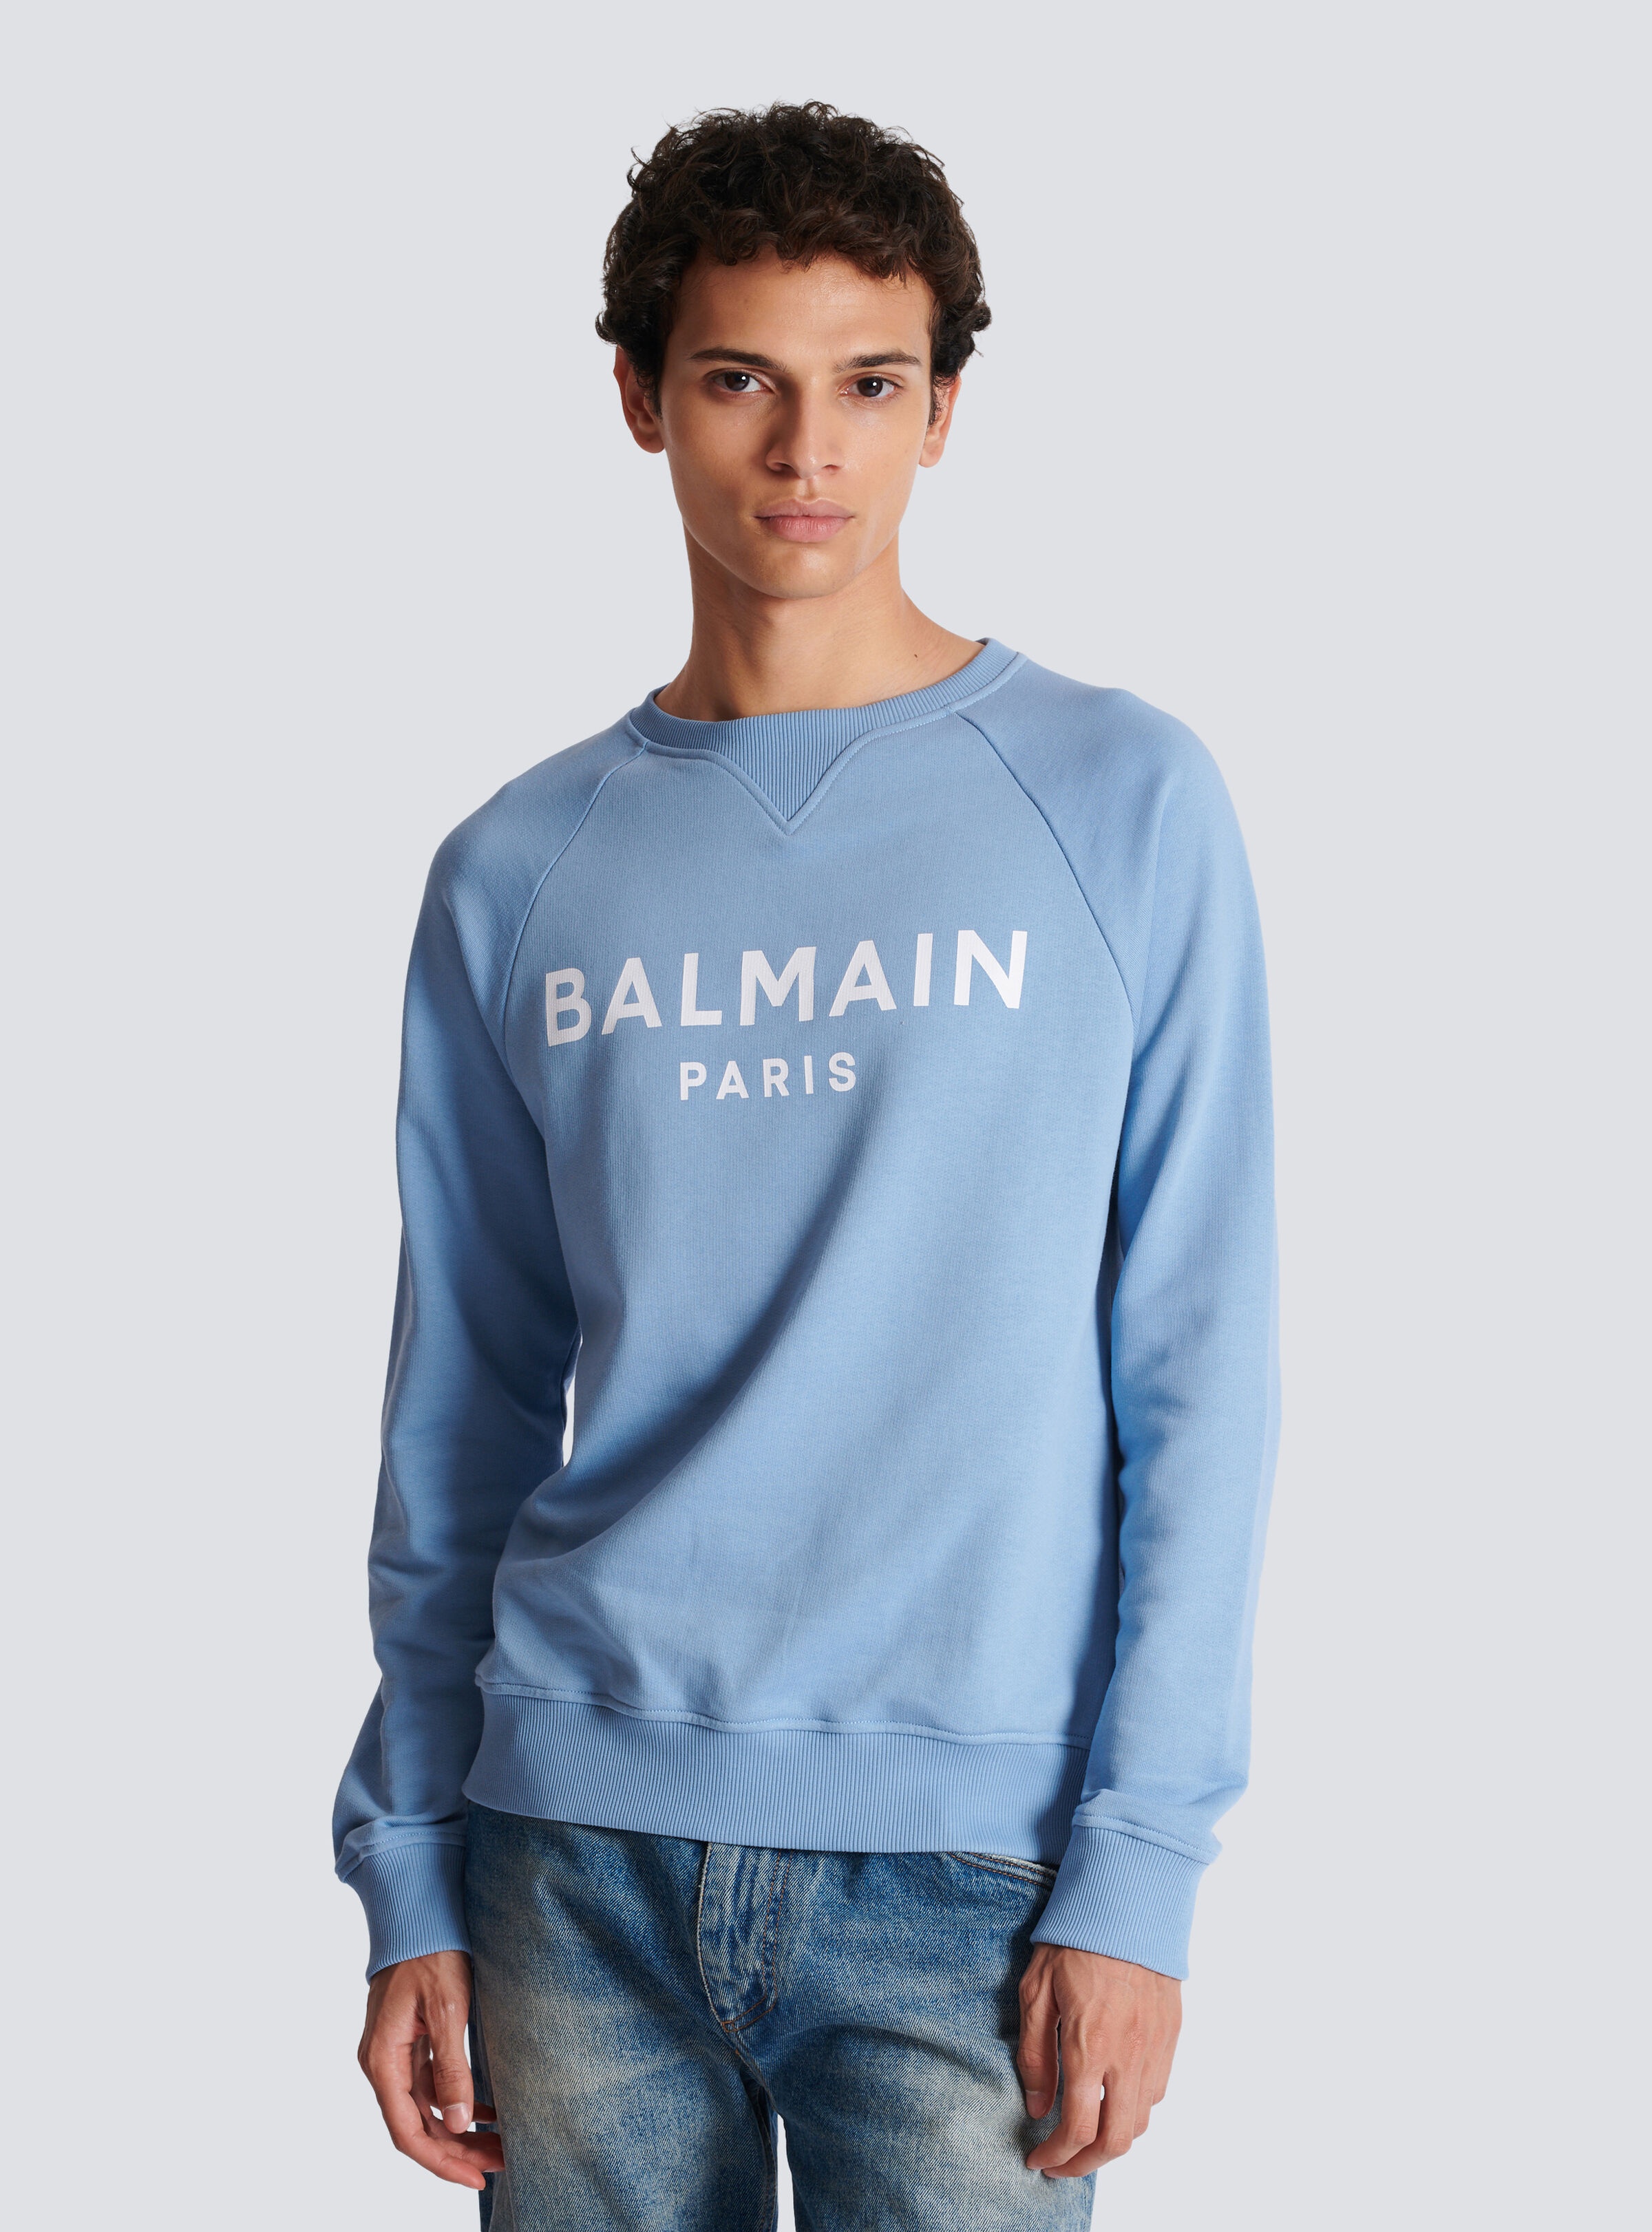 Balmain Paris sweatshirt - 5